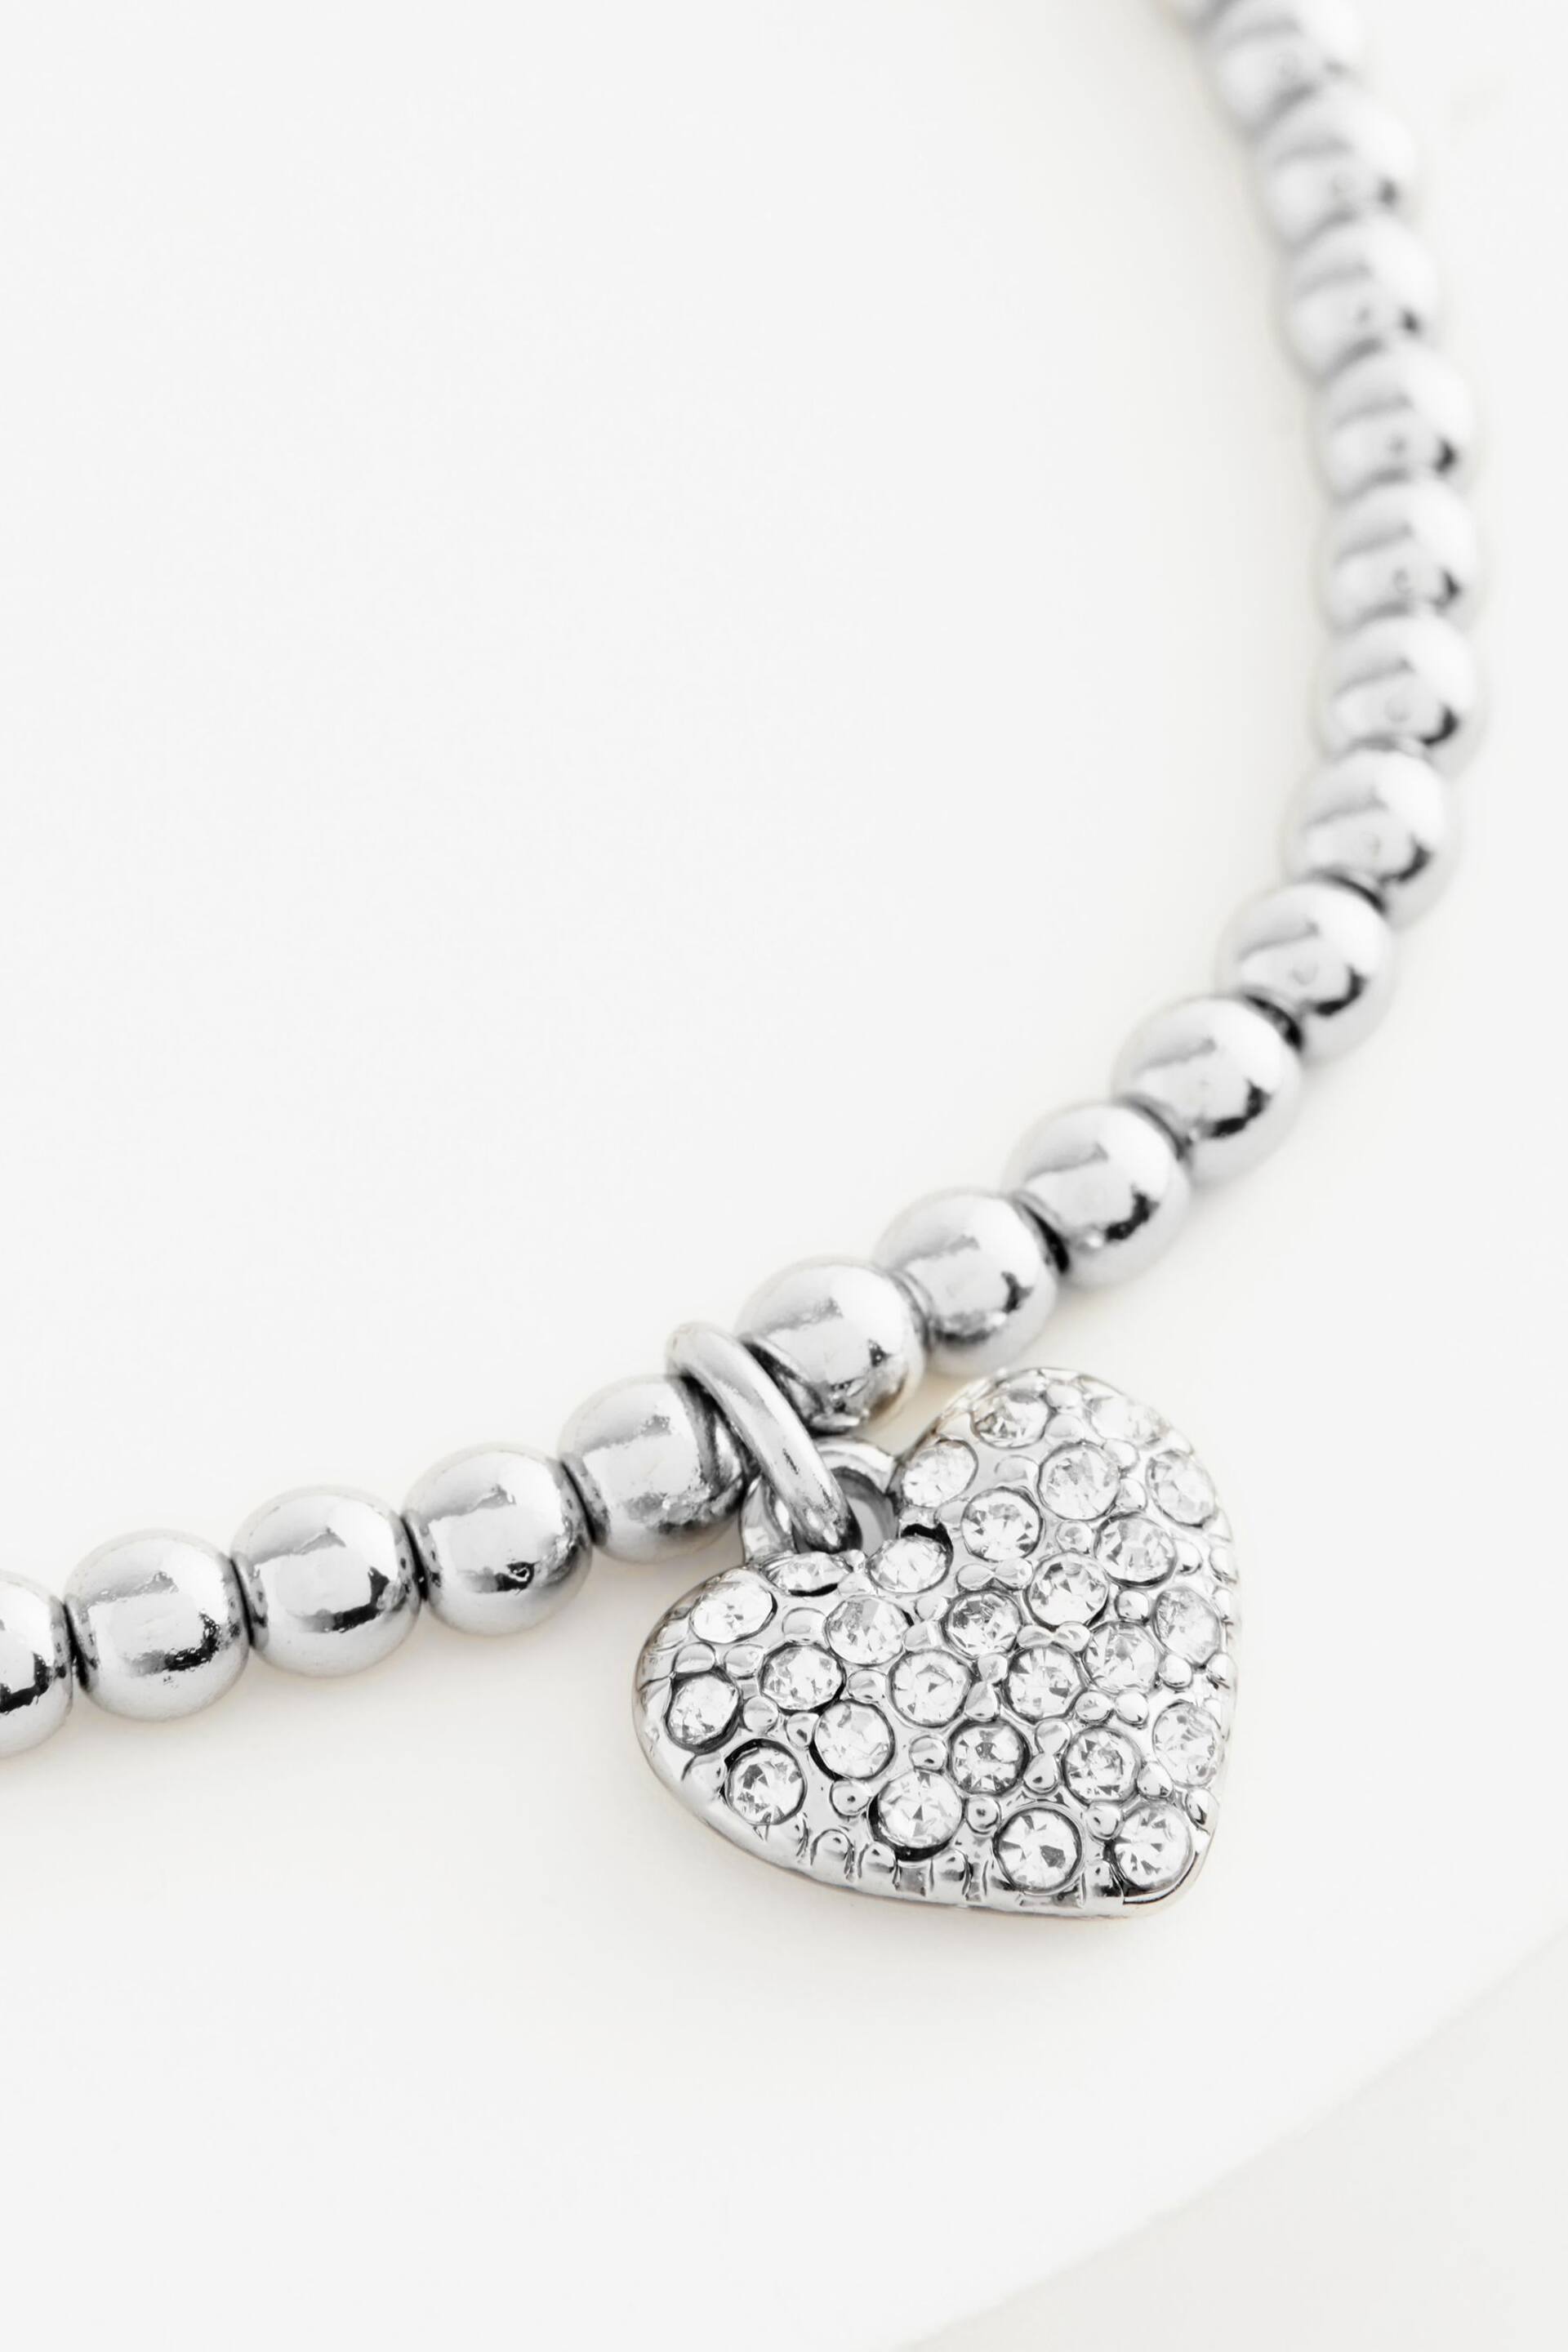 Silver Tone Sparkle Heart Beady Pully Bracelet - Image 2 of 3